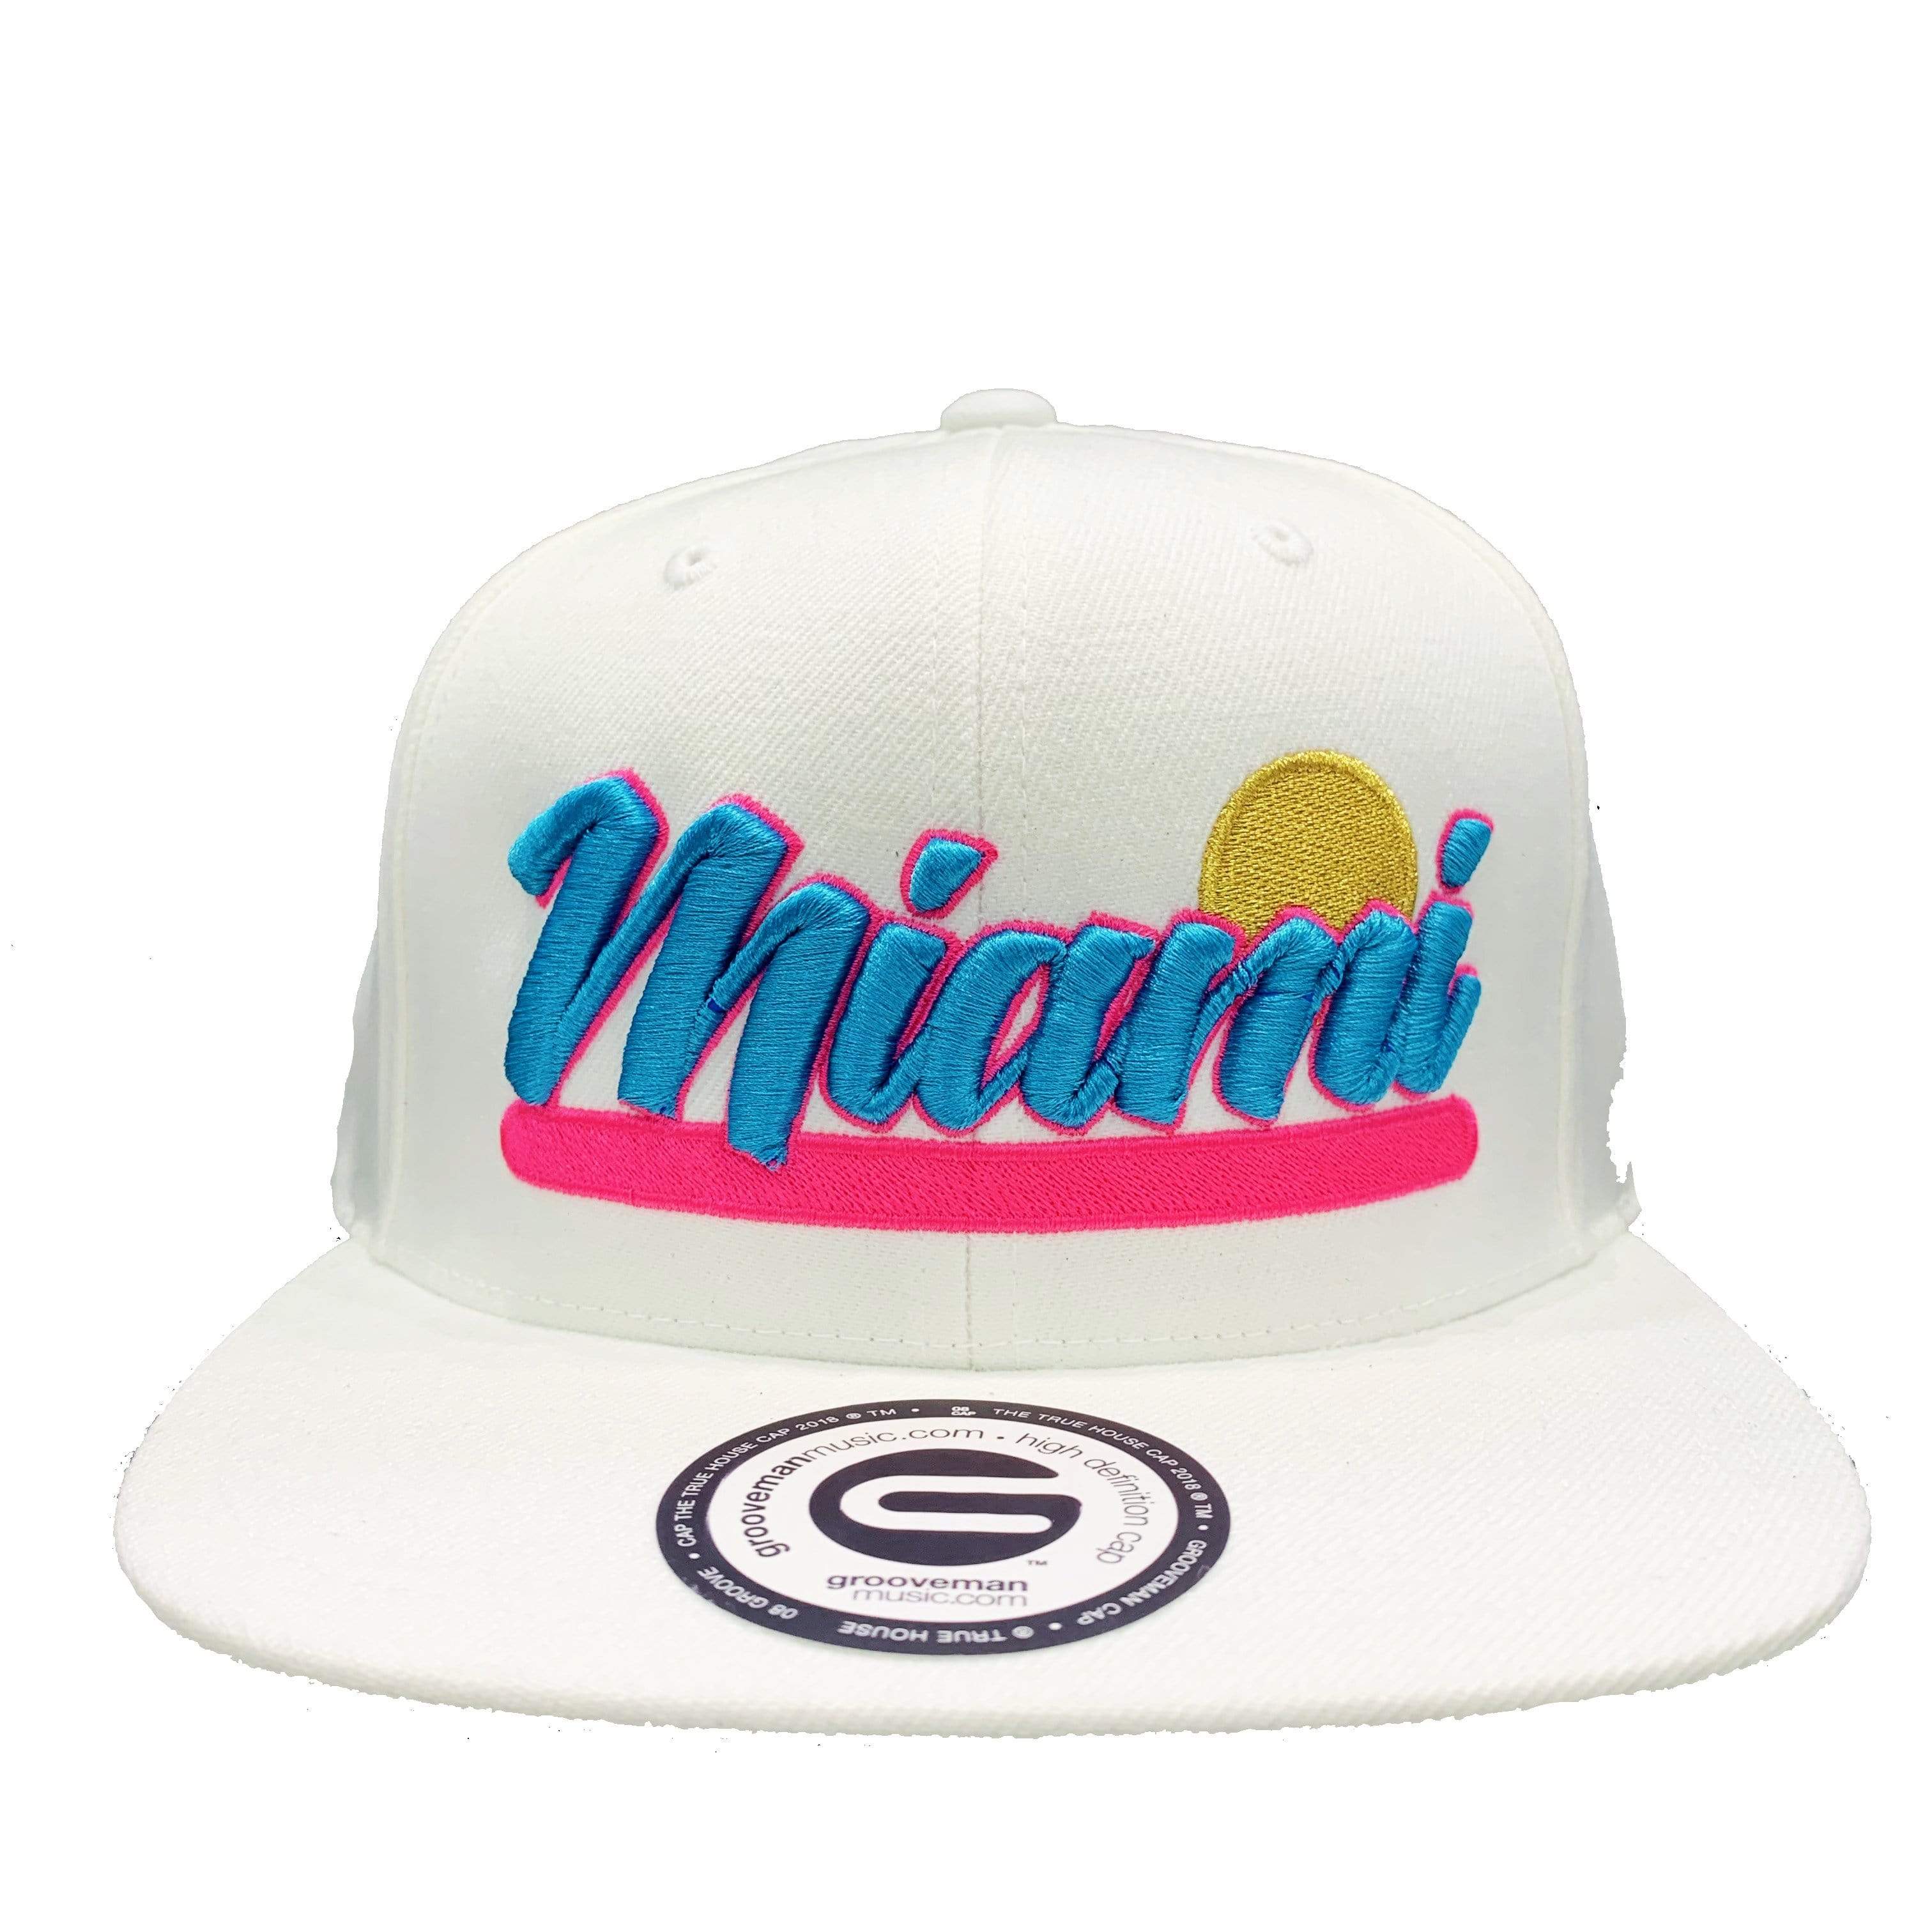 Grooveman Music Hats One Size / White Miami Sun Snapback